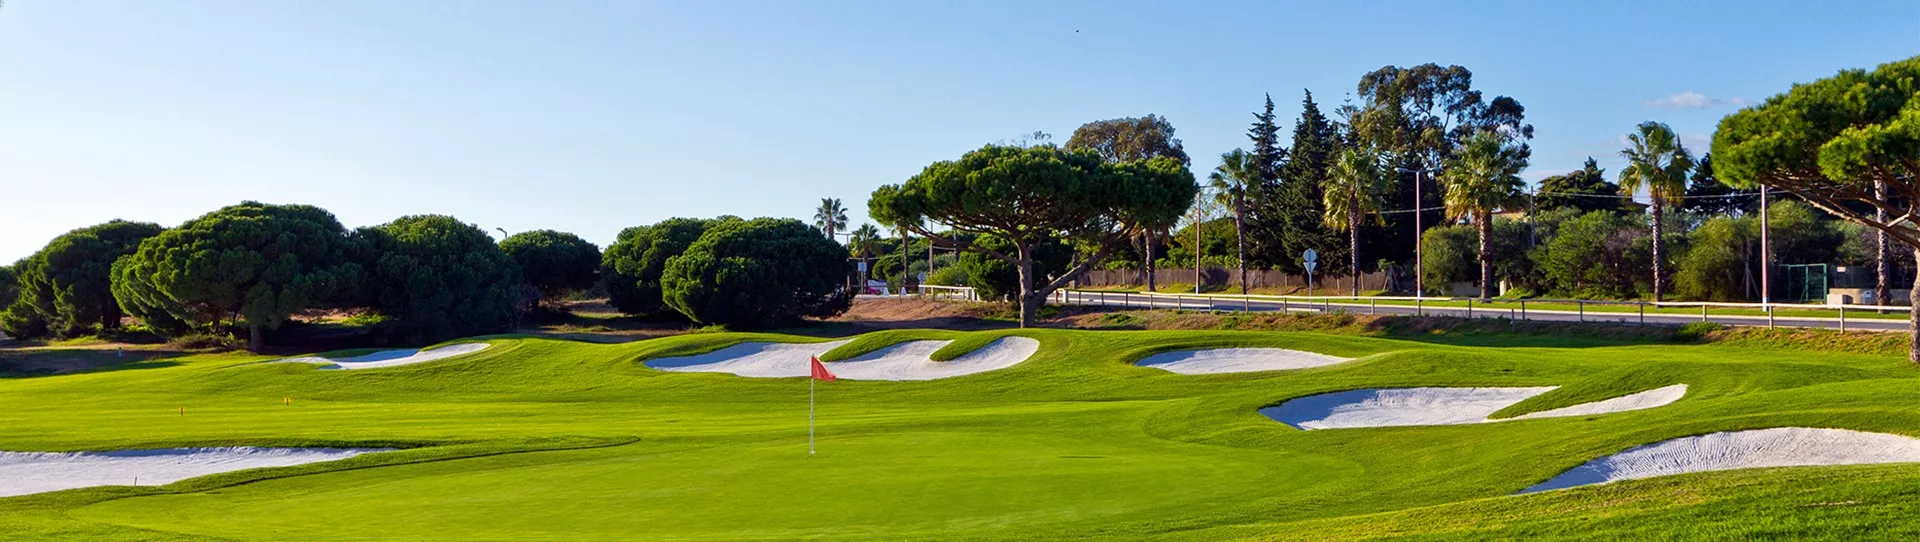 Portugal golf courses - Vale do Lobo Royal - Photo 1